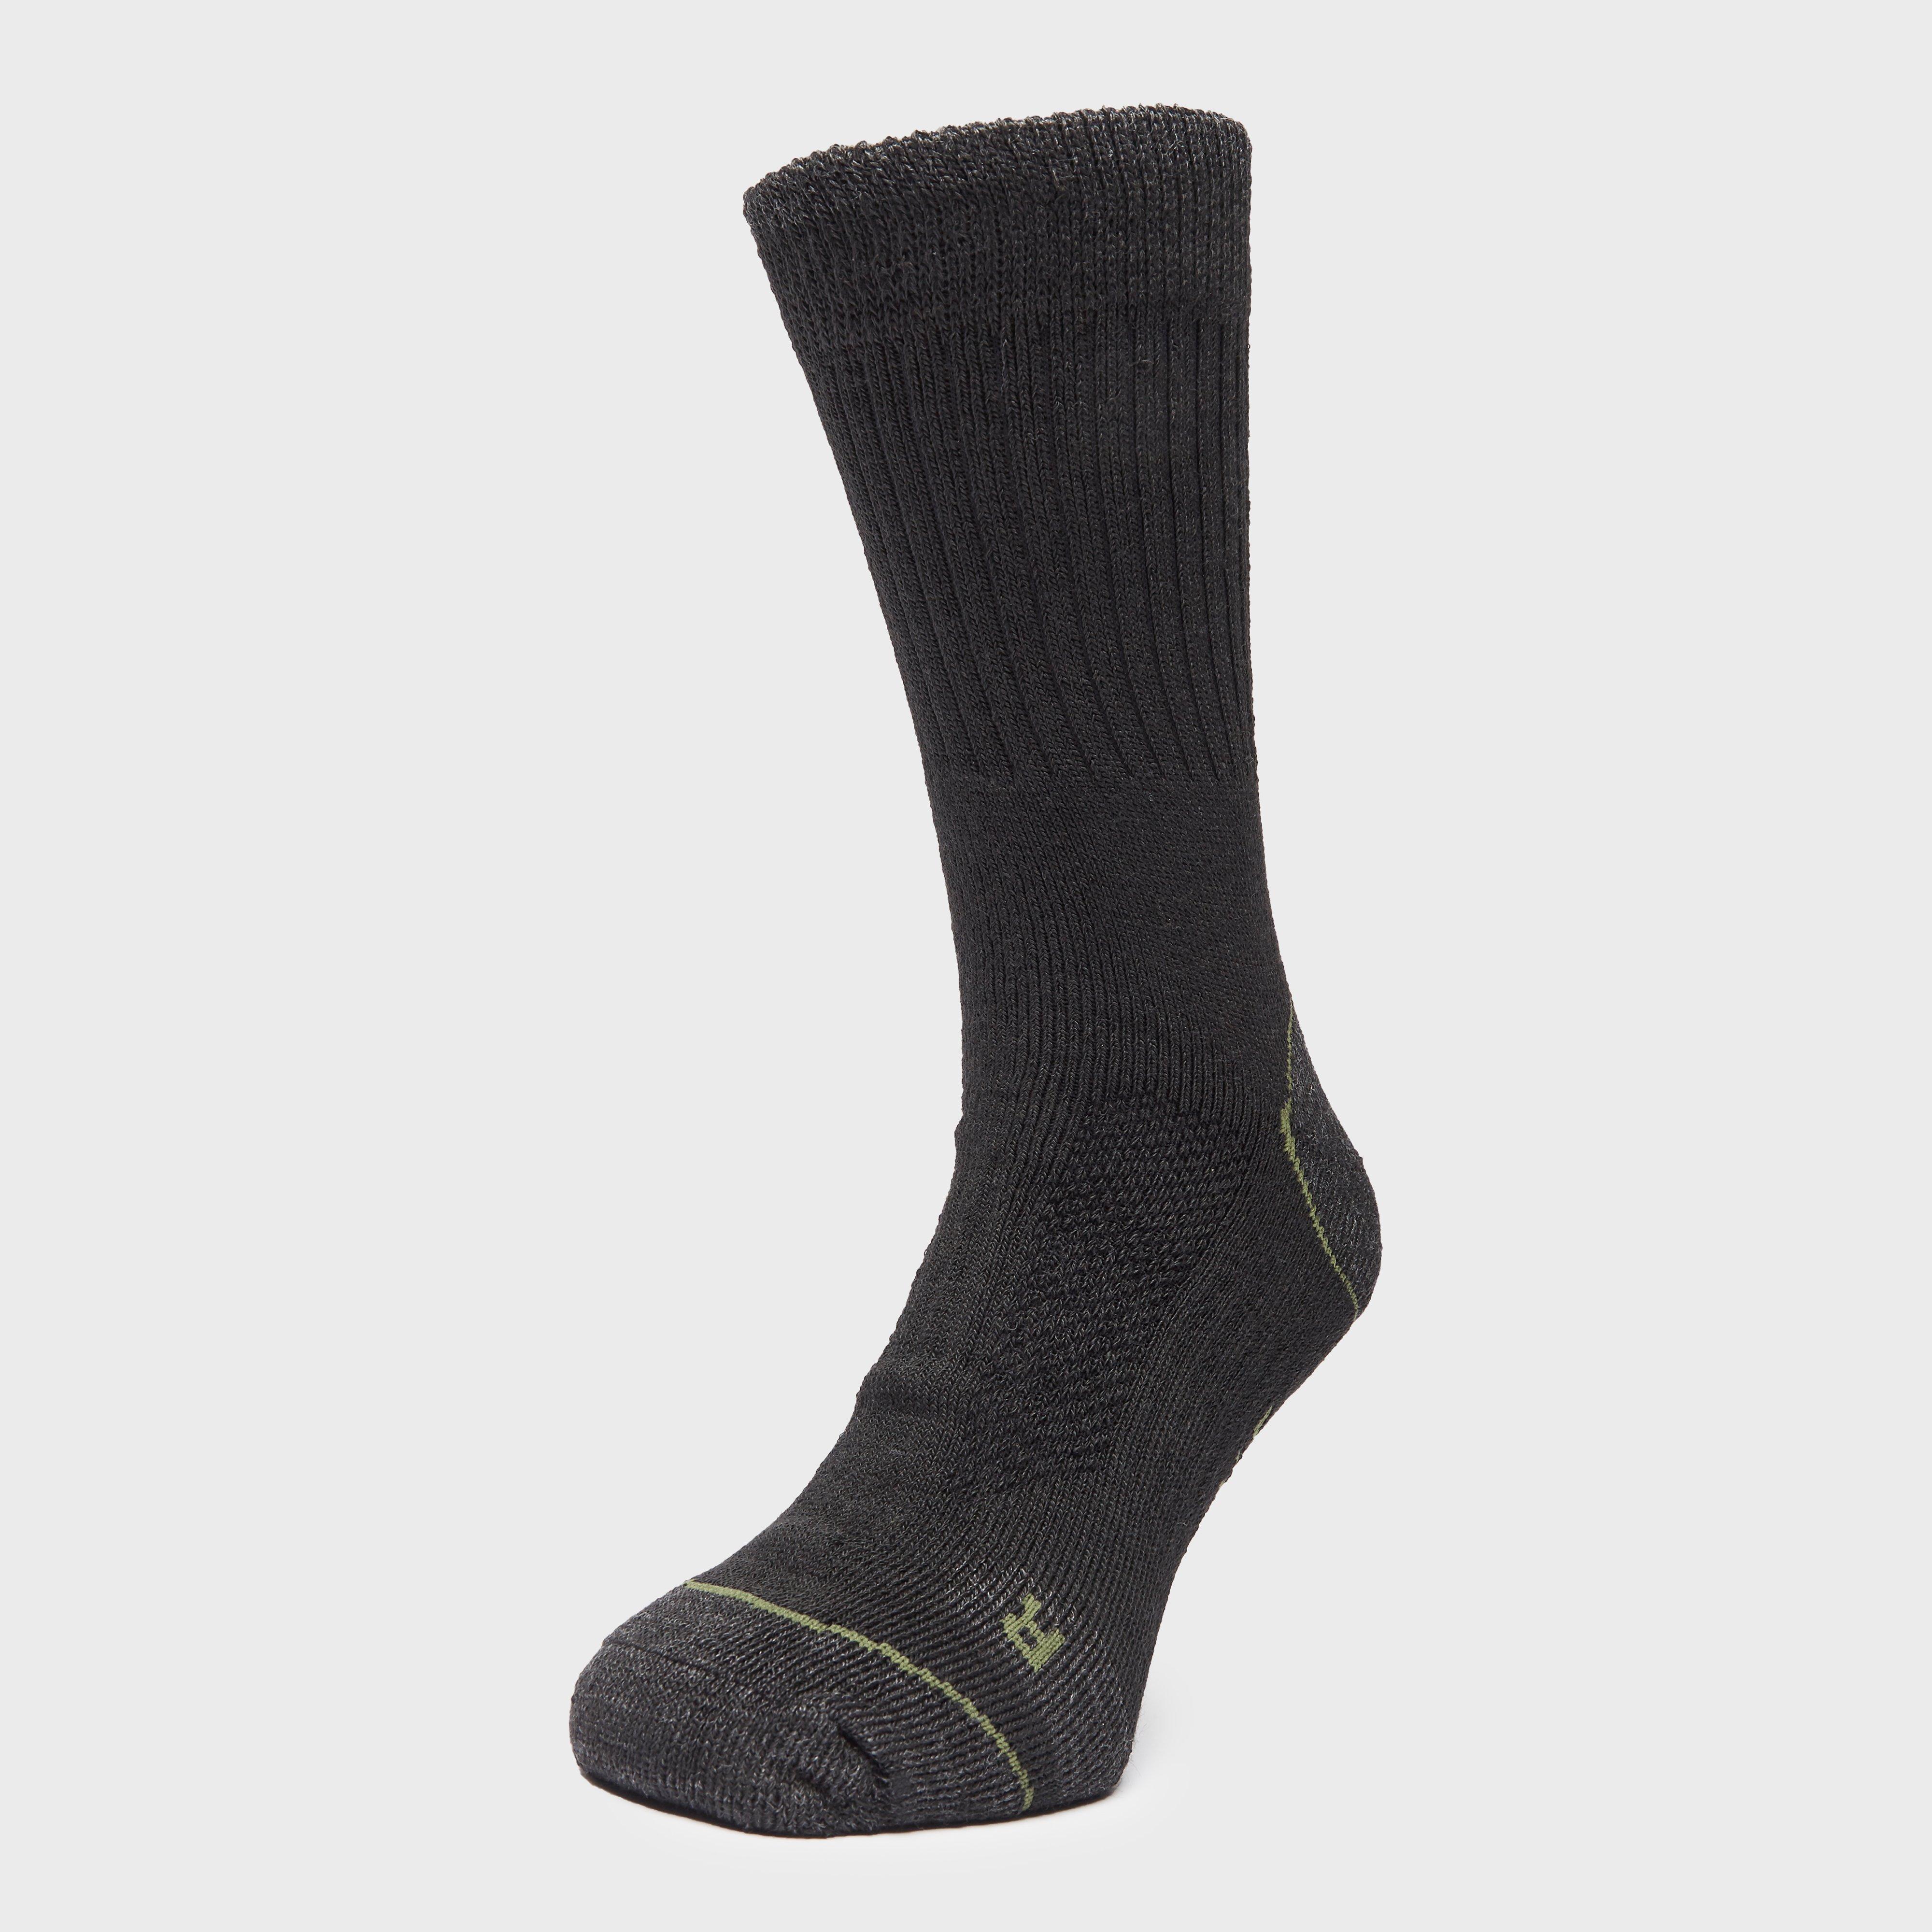 Sealskinz Menâ€™s Walking Thin Mid Socks Review